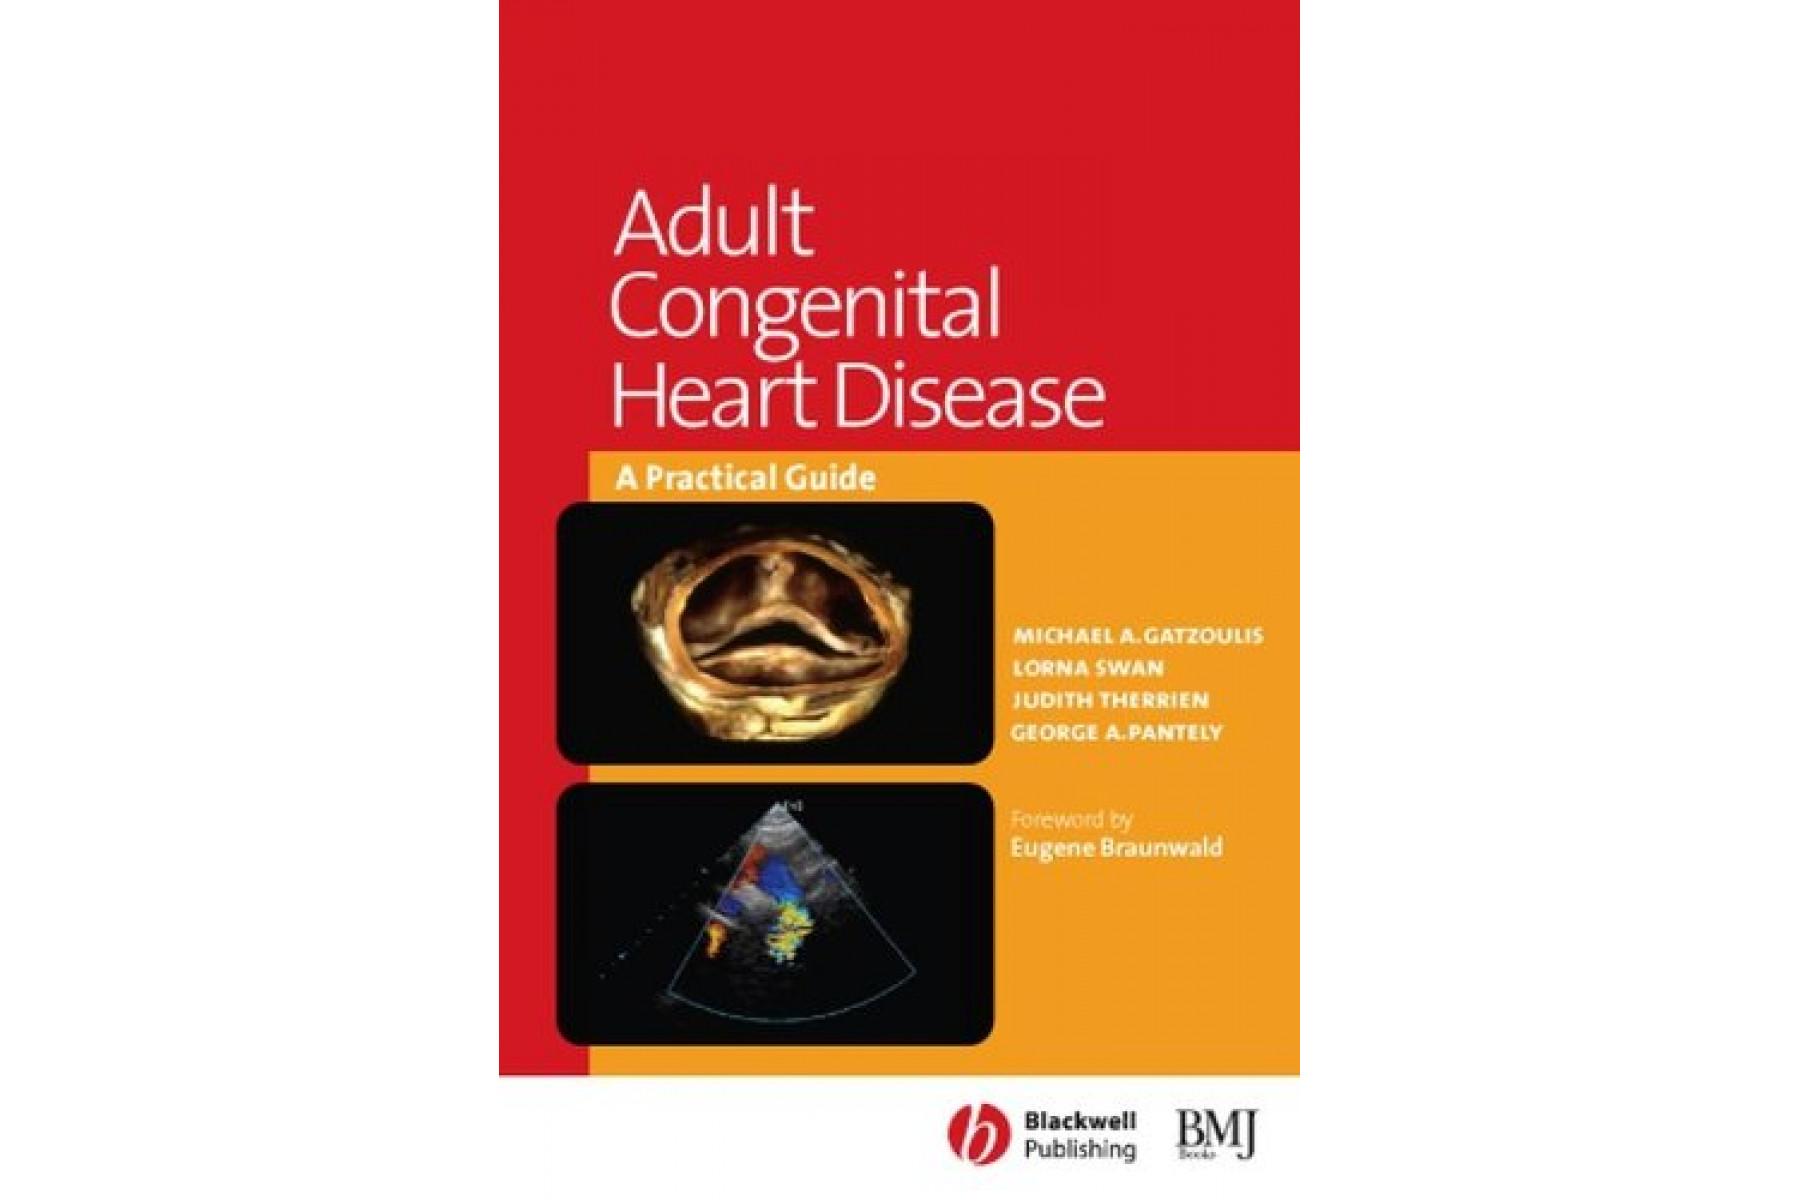 Adult Congenital Heart Disease: a Practical Guide